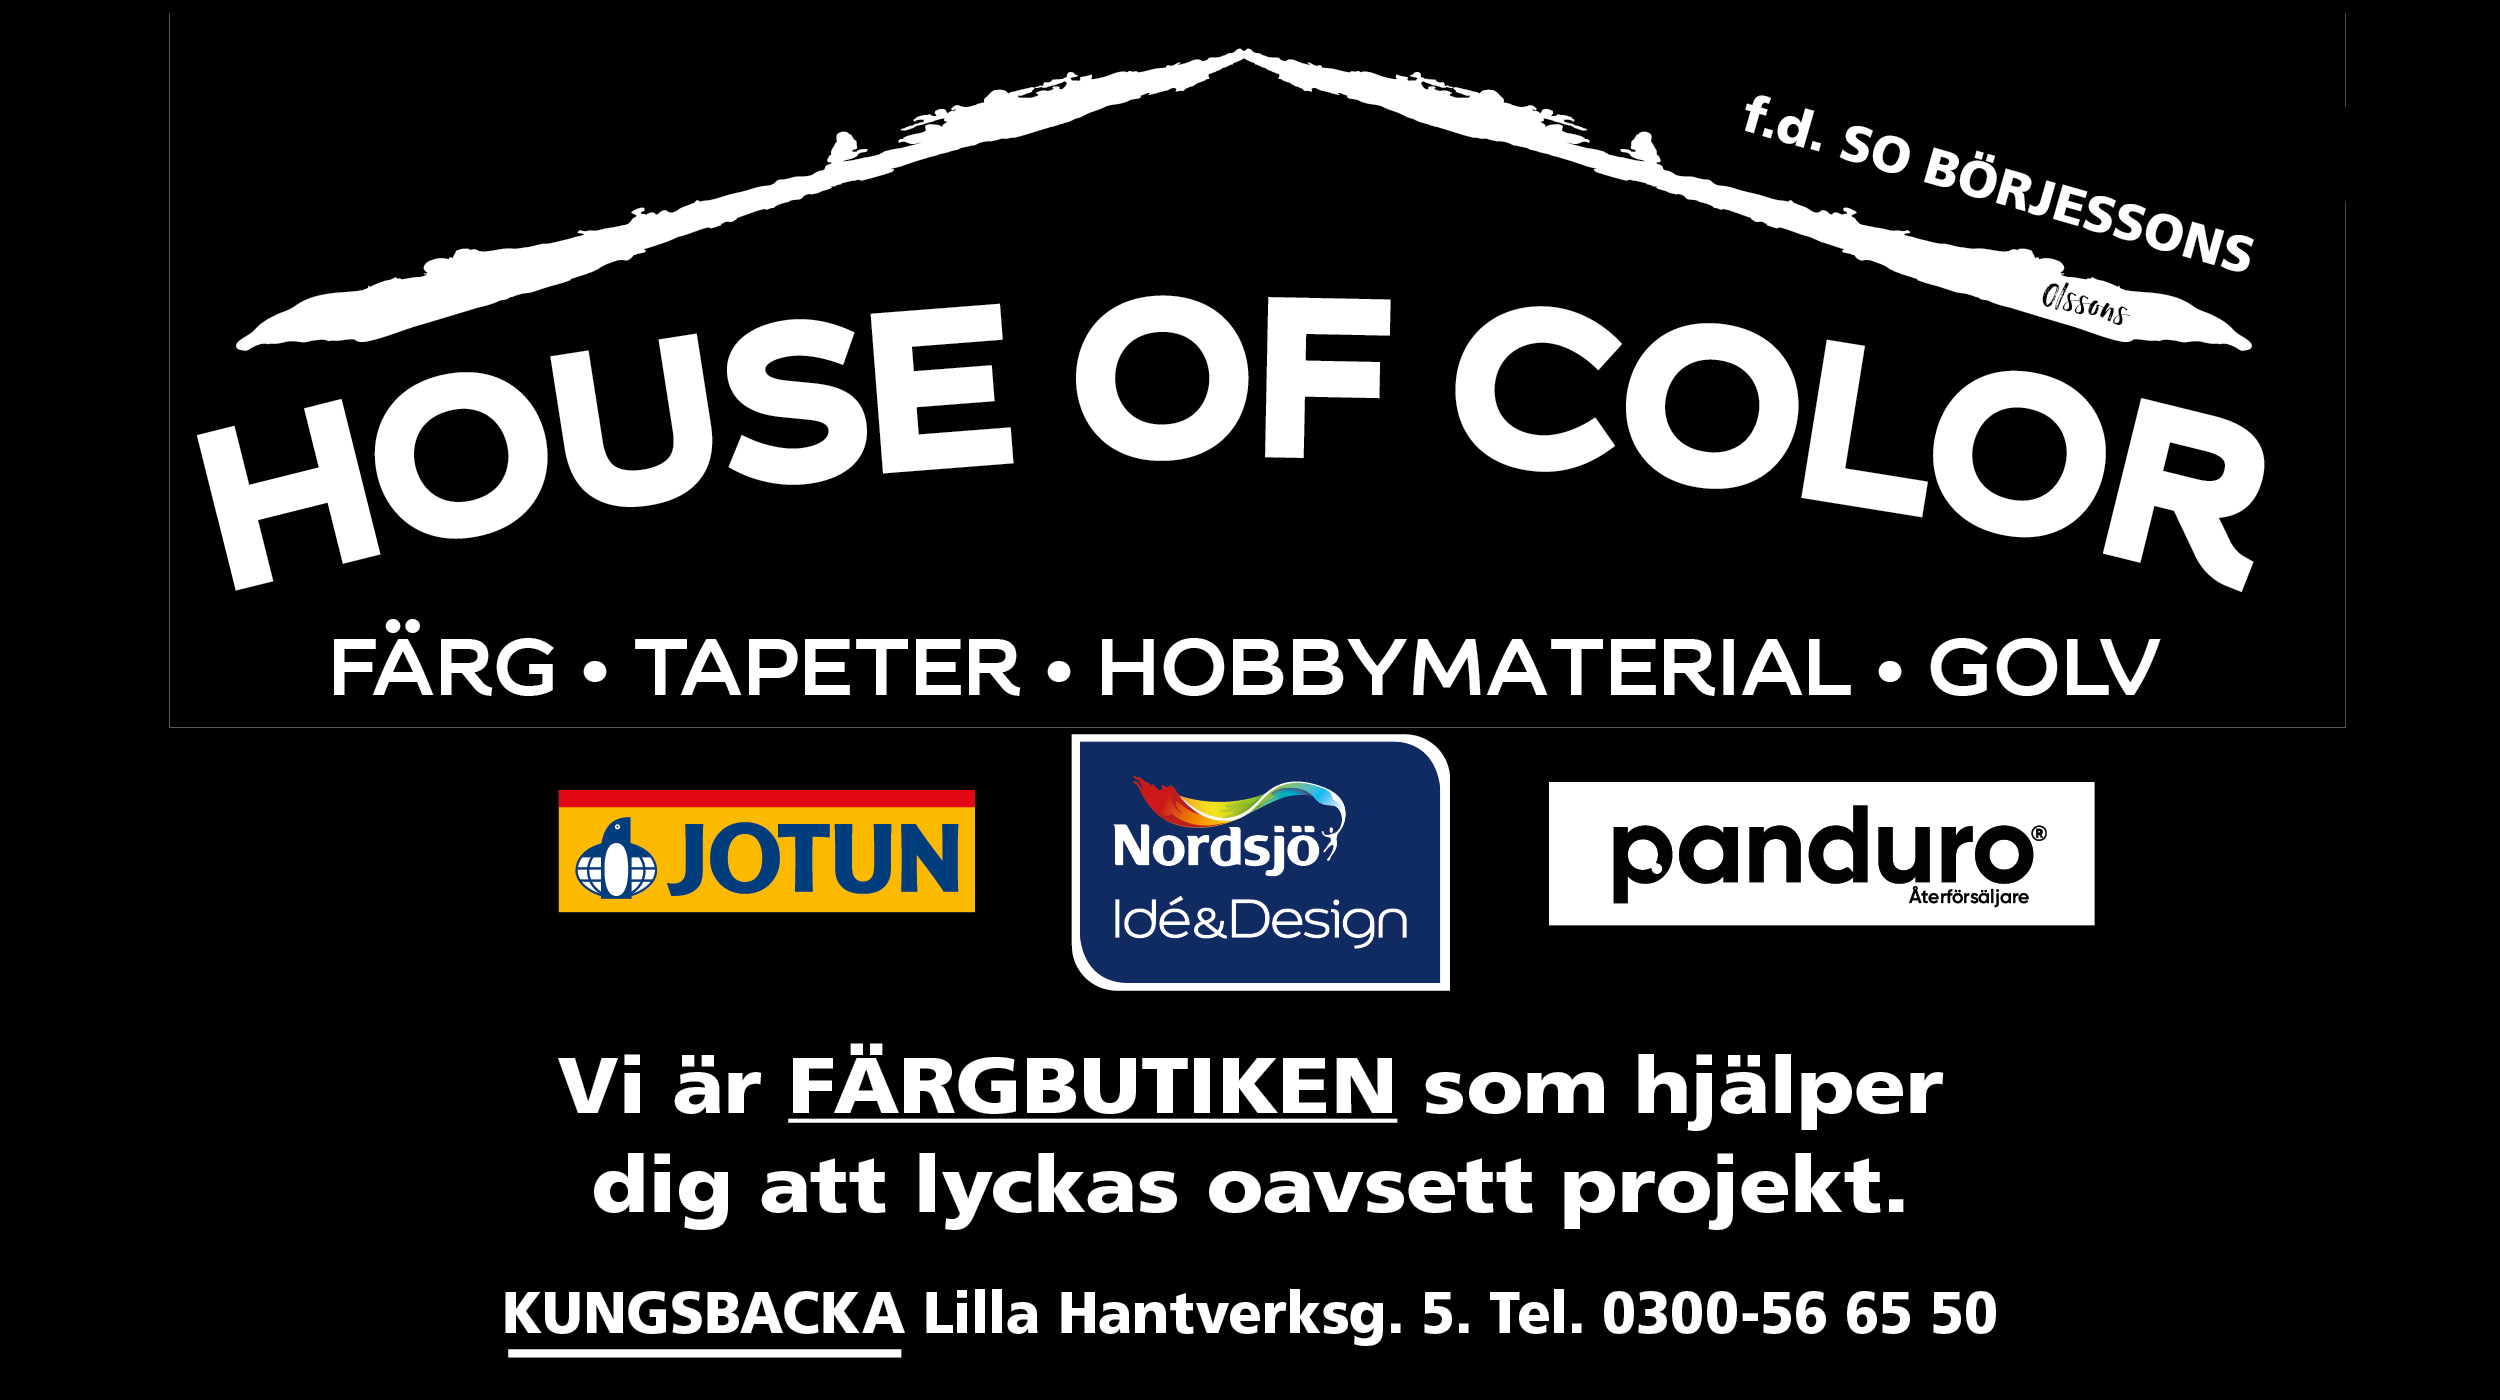 HOUSE OF COLOR Nordsjö Idé & Design